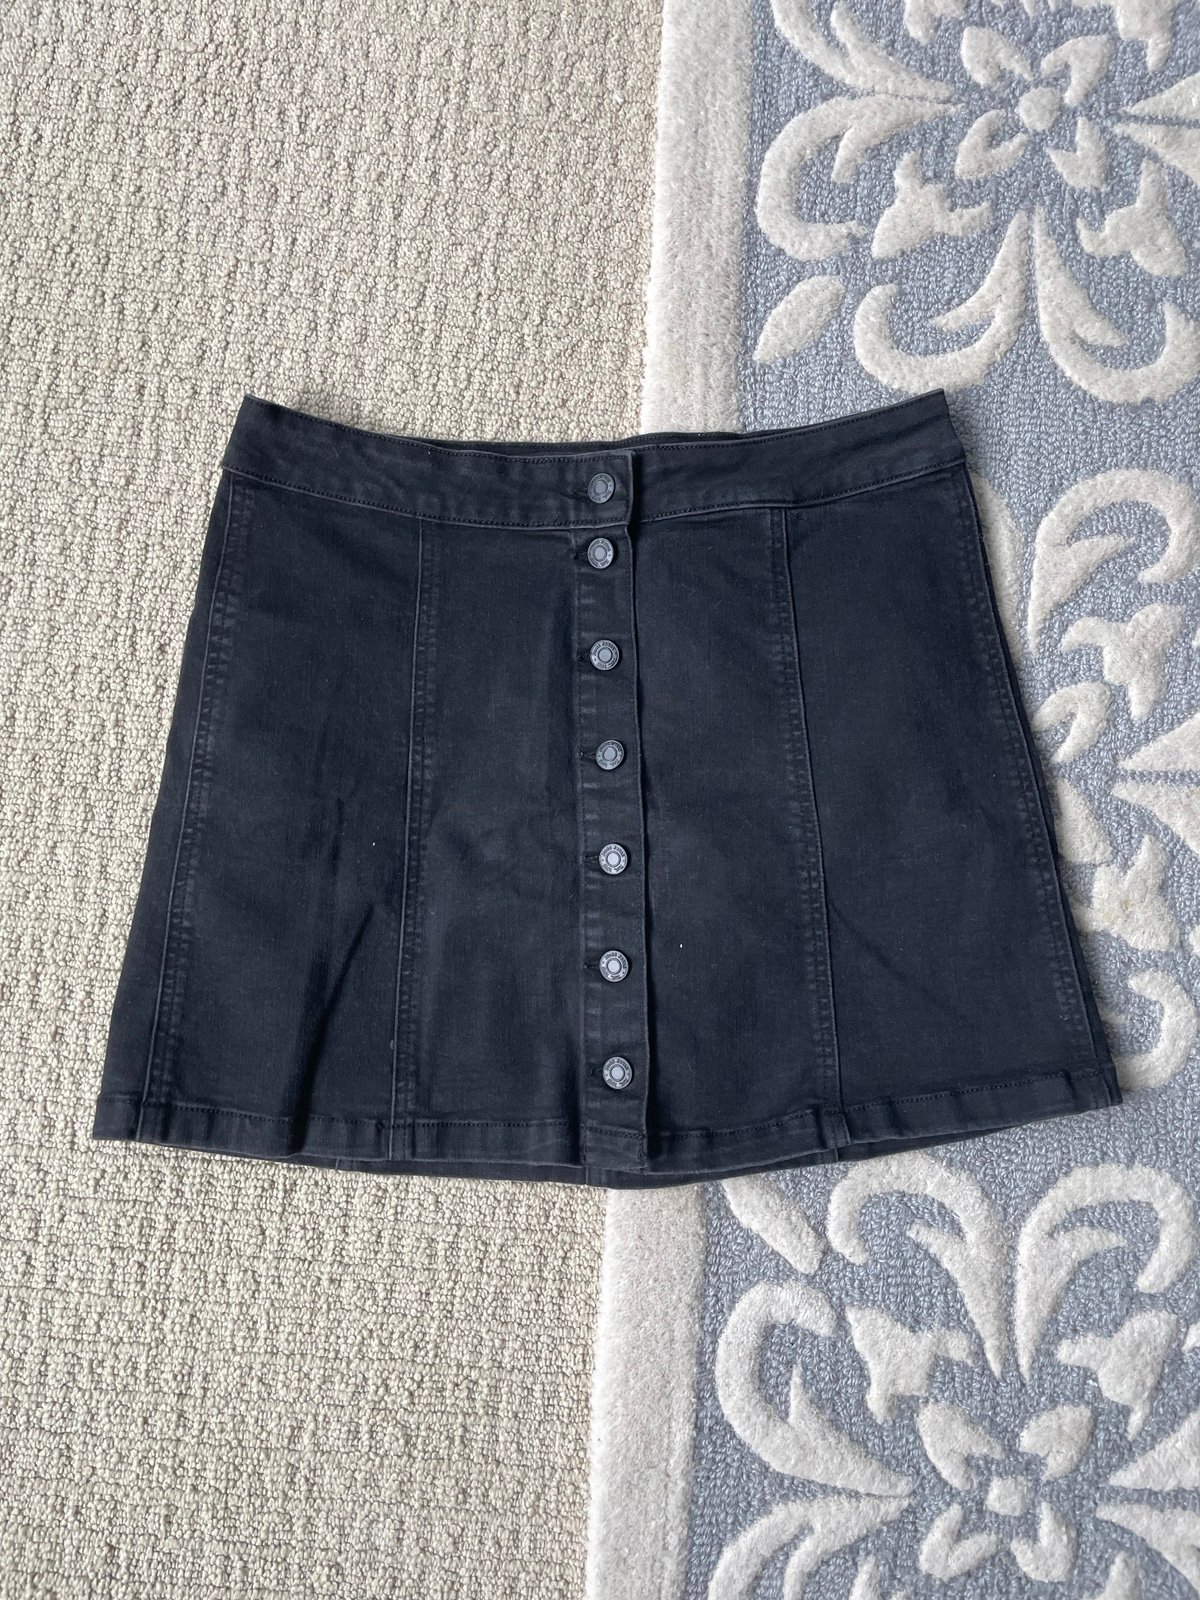 Special offer  Mudd black jean mini skirt nXXCrb85s Gre